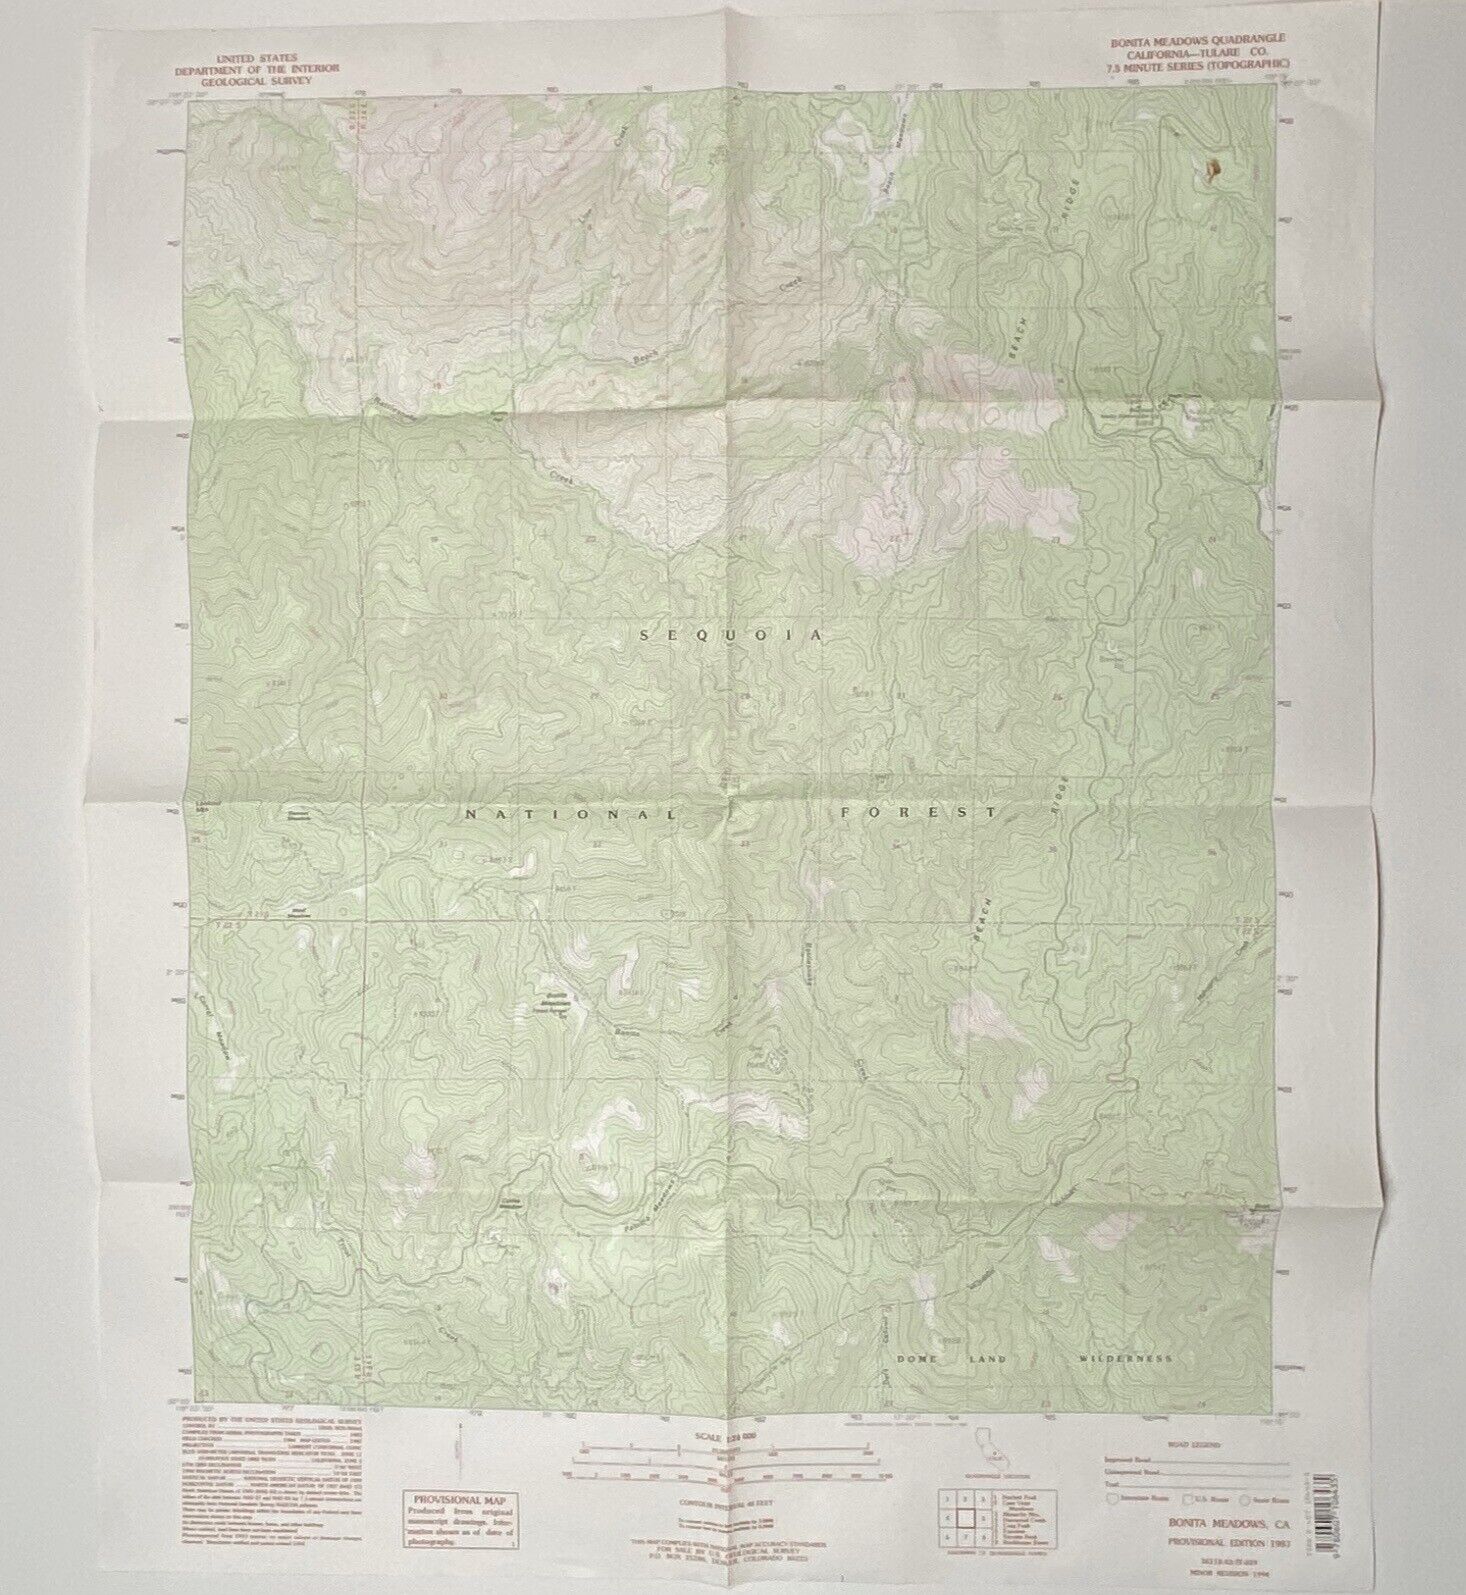 Bonita Meadows Quadrangle - Tulare California • 1994 Geological Topographic Map